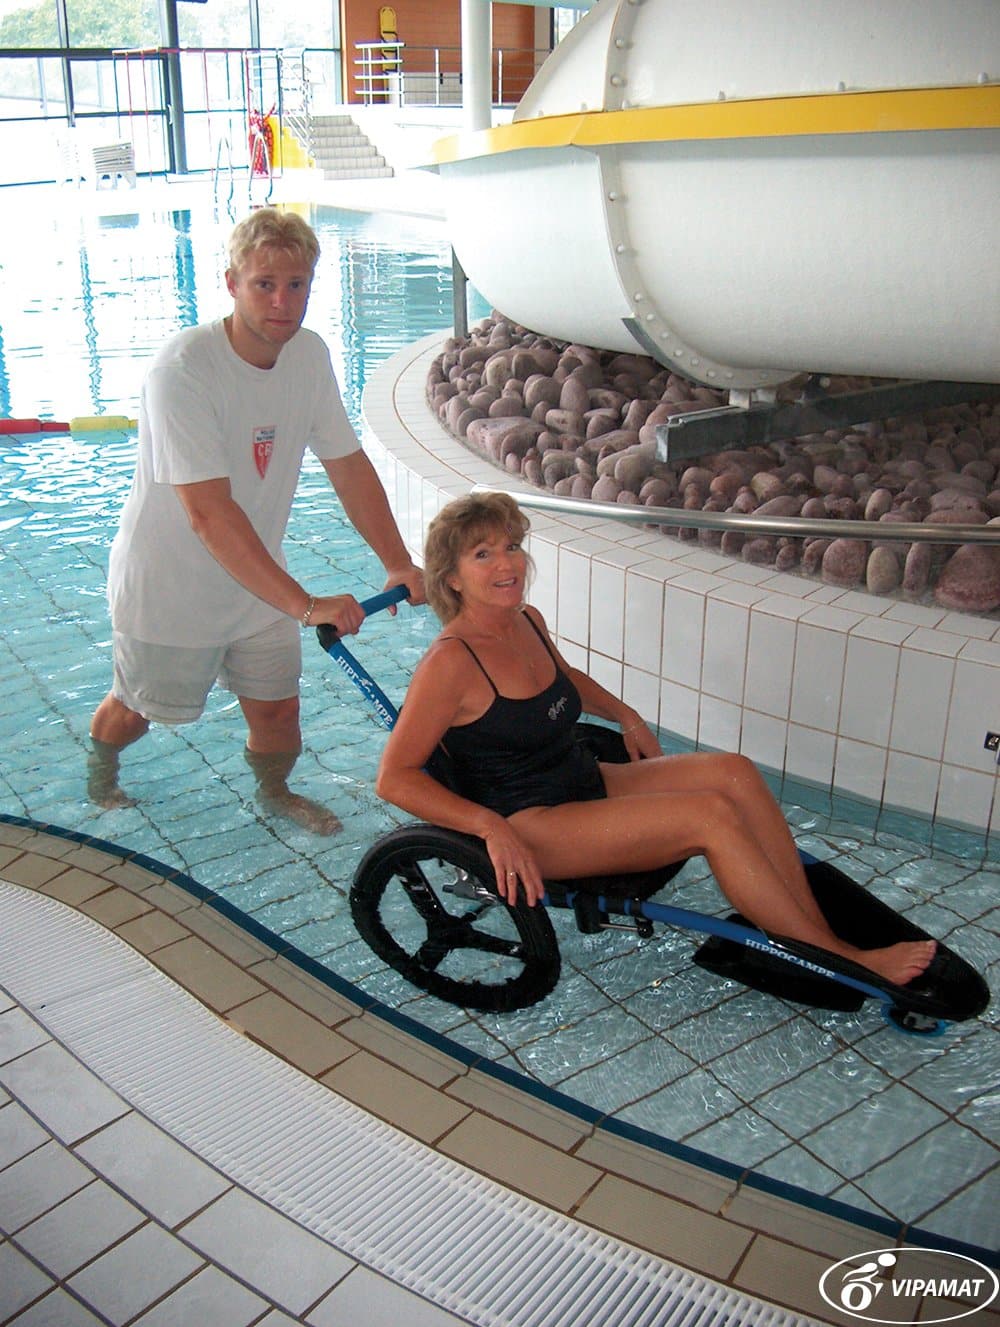 Hippocampe All-Terrain High Performance Wheelchair - Fixed Back - Senior.com Wheelchairs